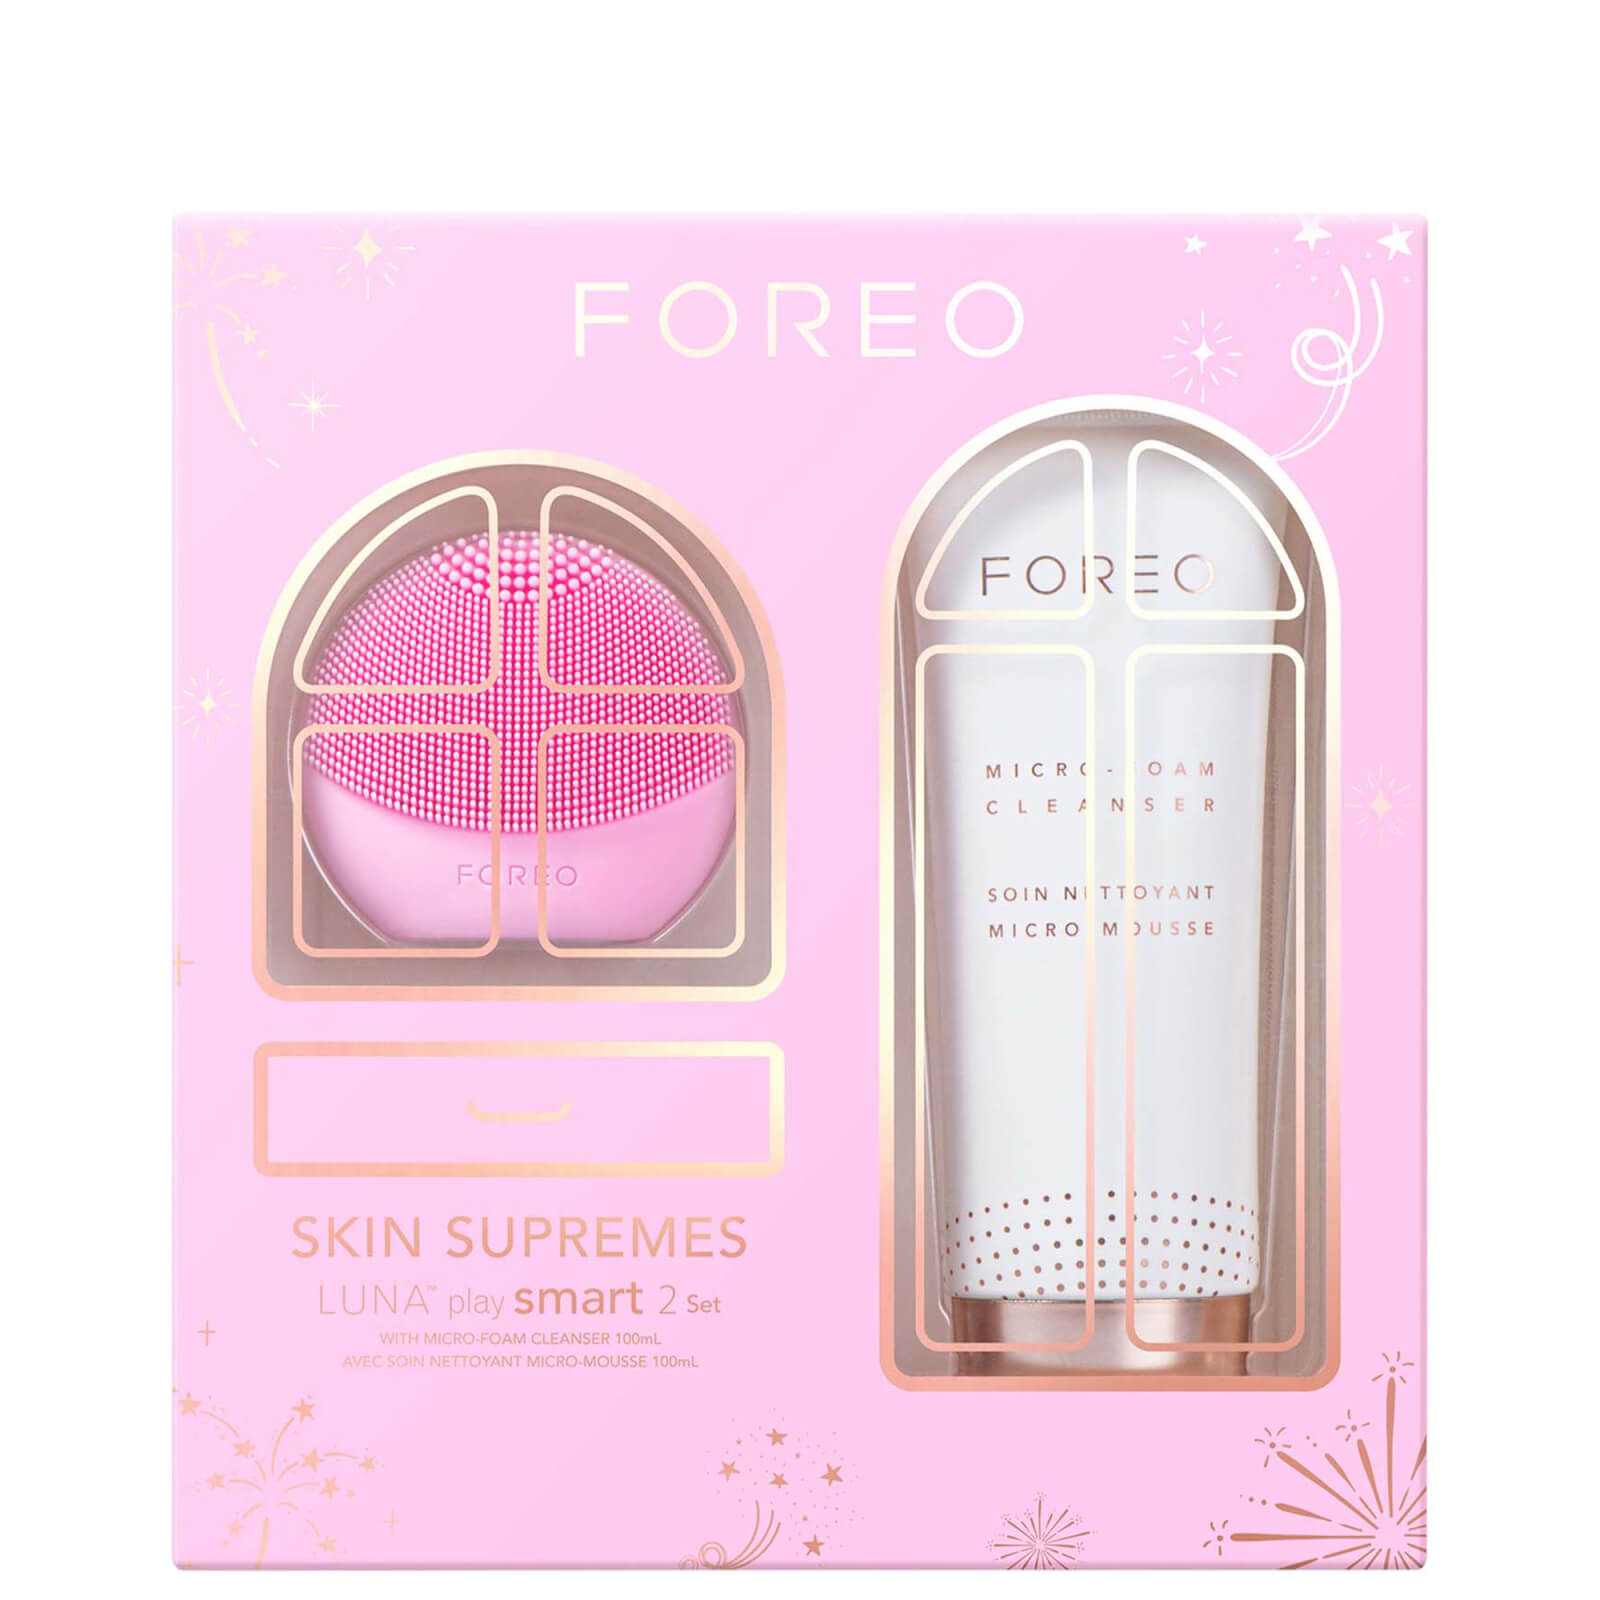 Image of FOREO Skin Supremes LUNA Play Smart 2 Set